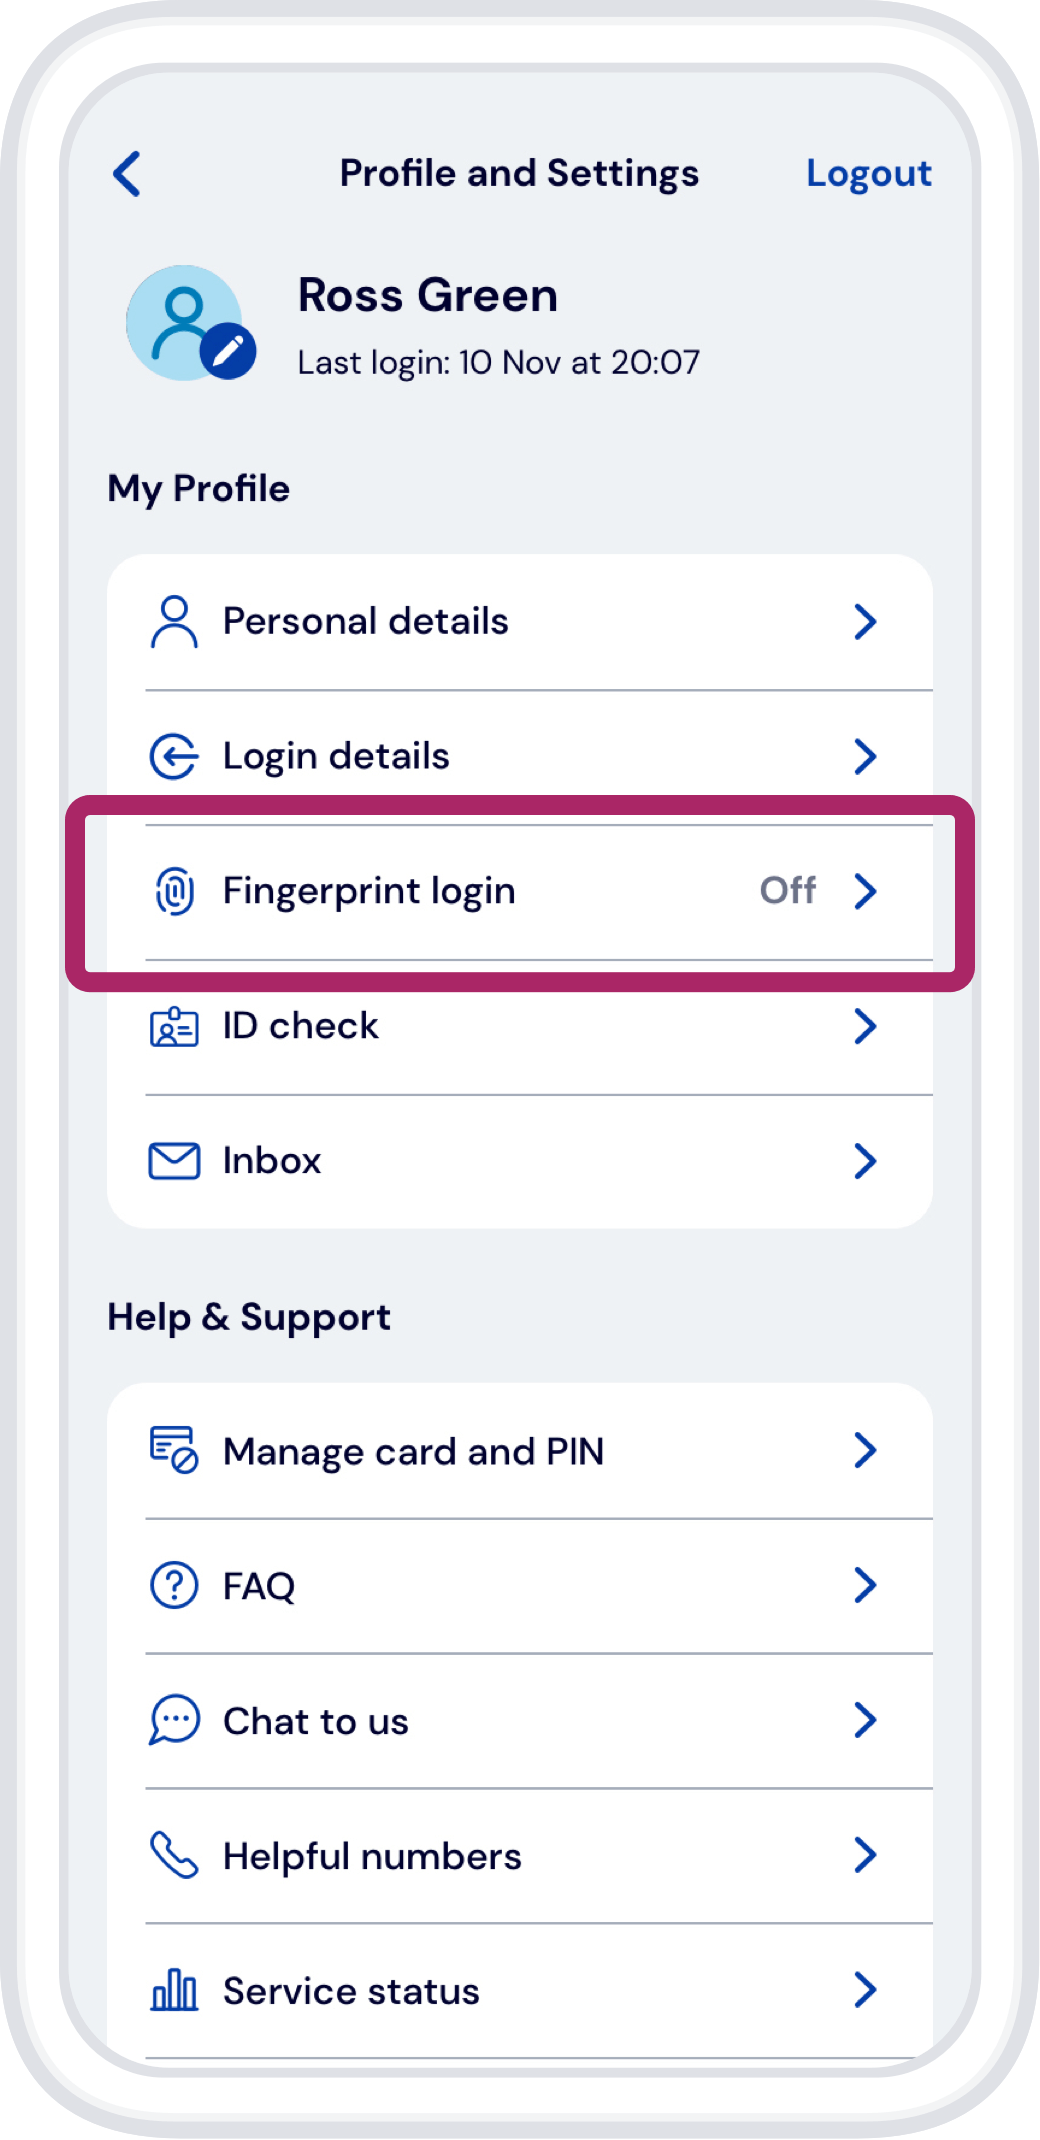 Tag fingerprint login